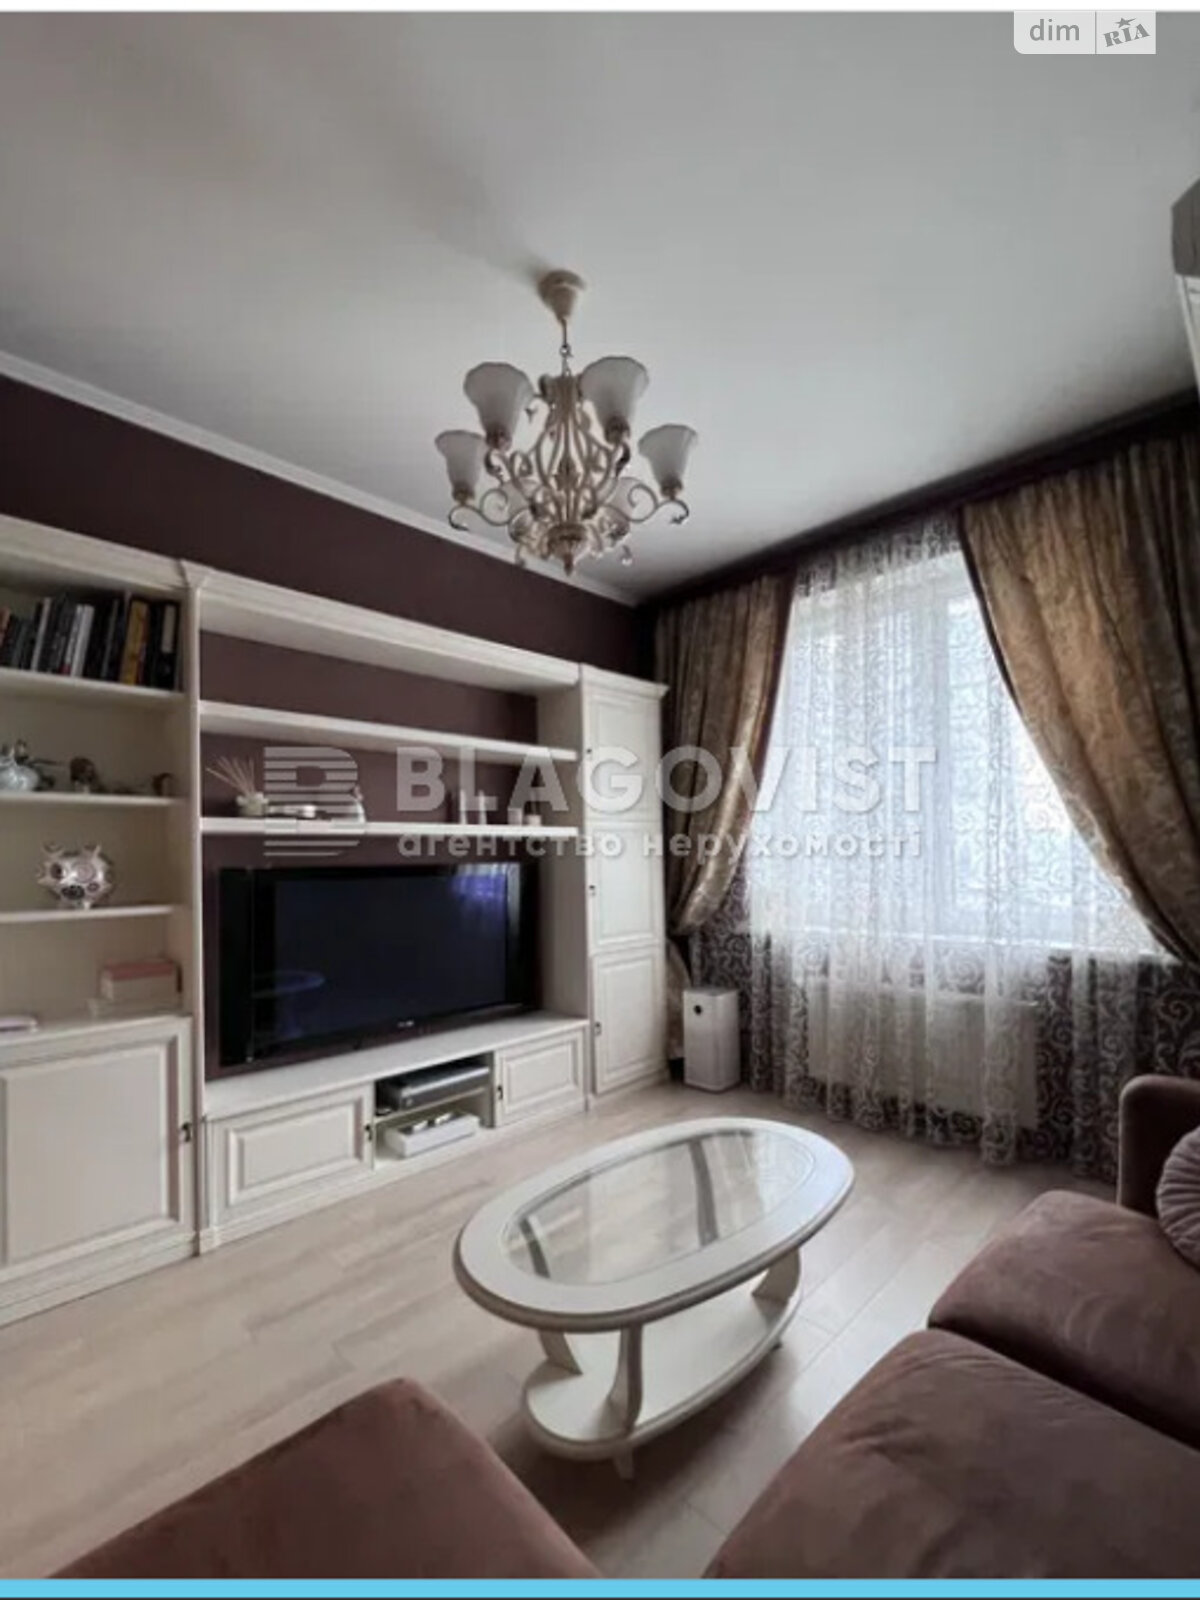 Продаж двокімнатної квартири в Києві, на наб. Оболонська 1, фото 1